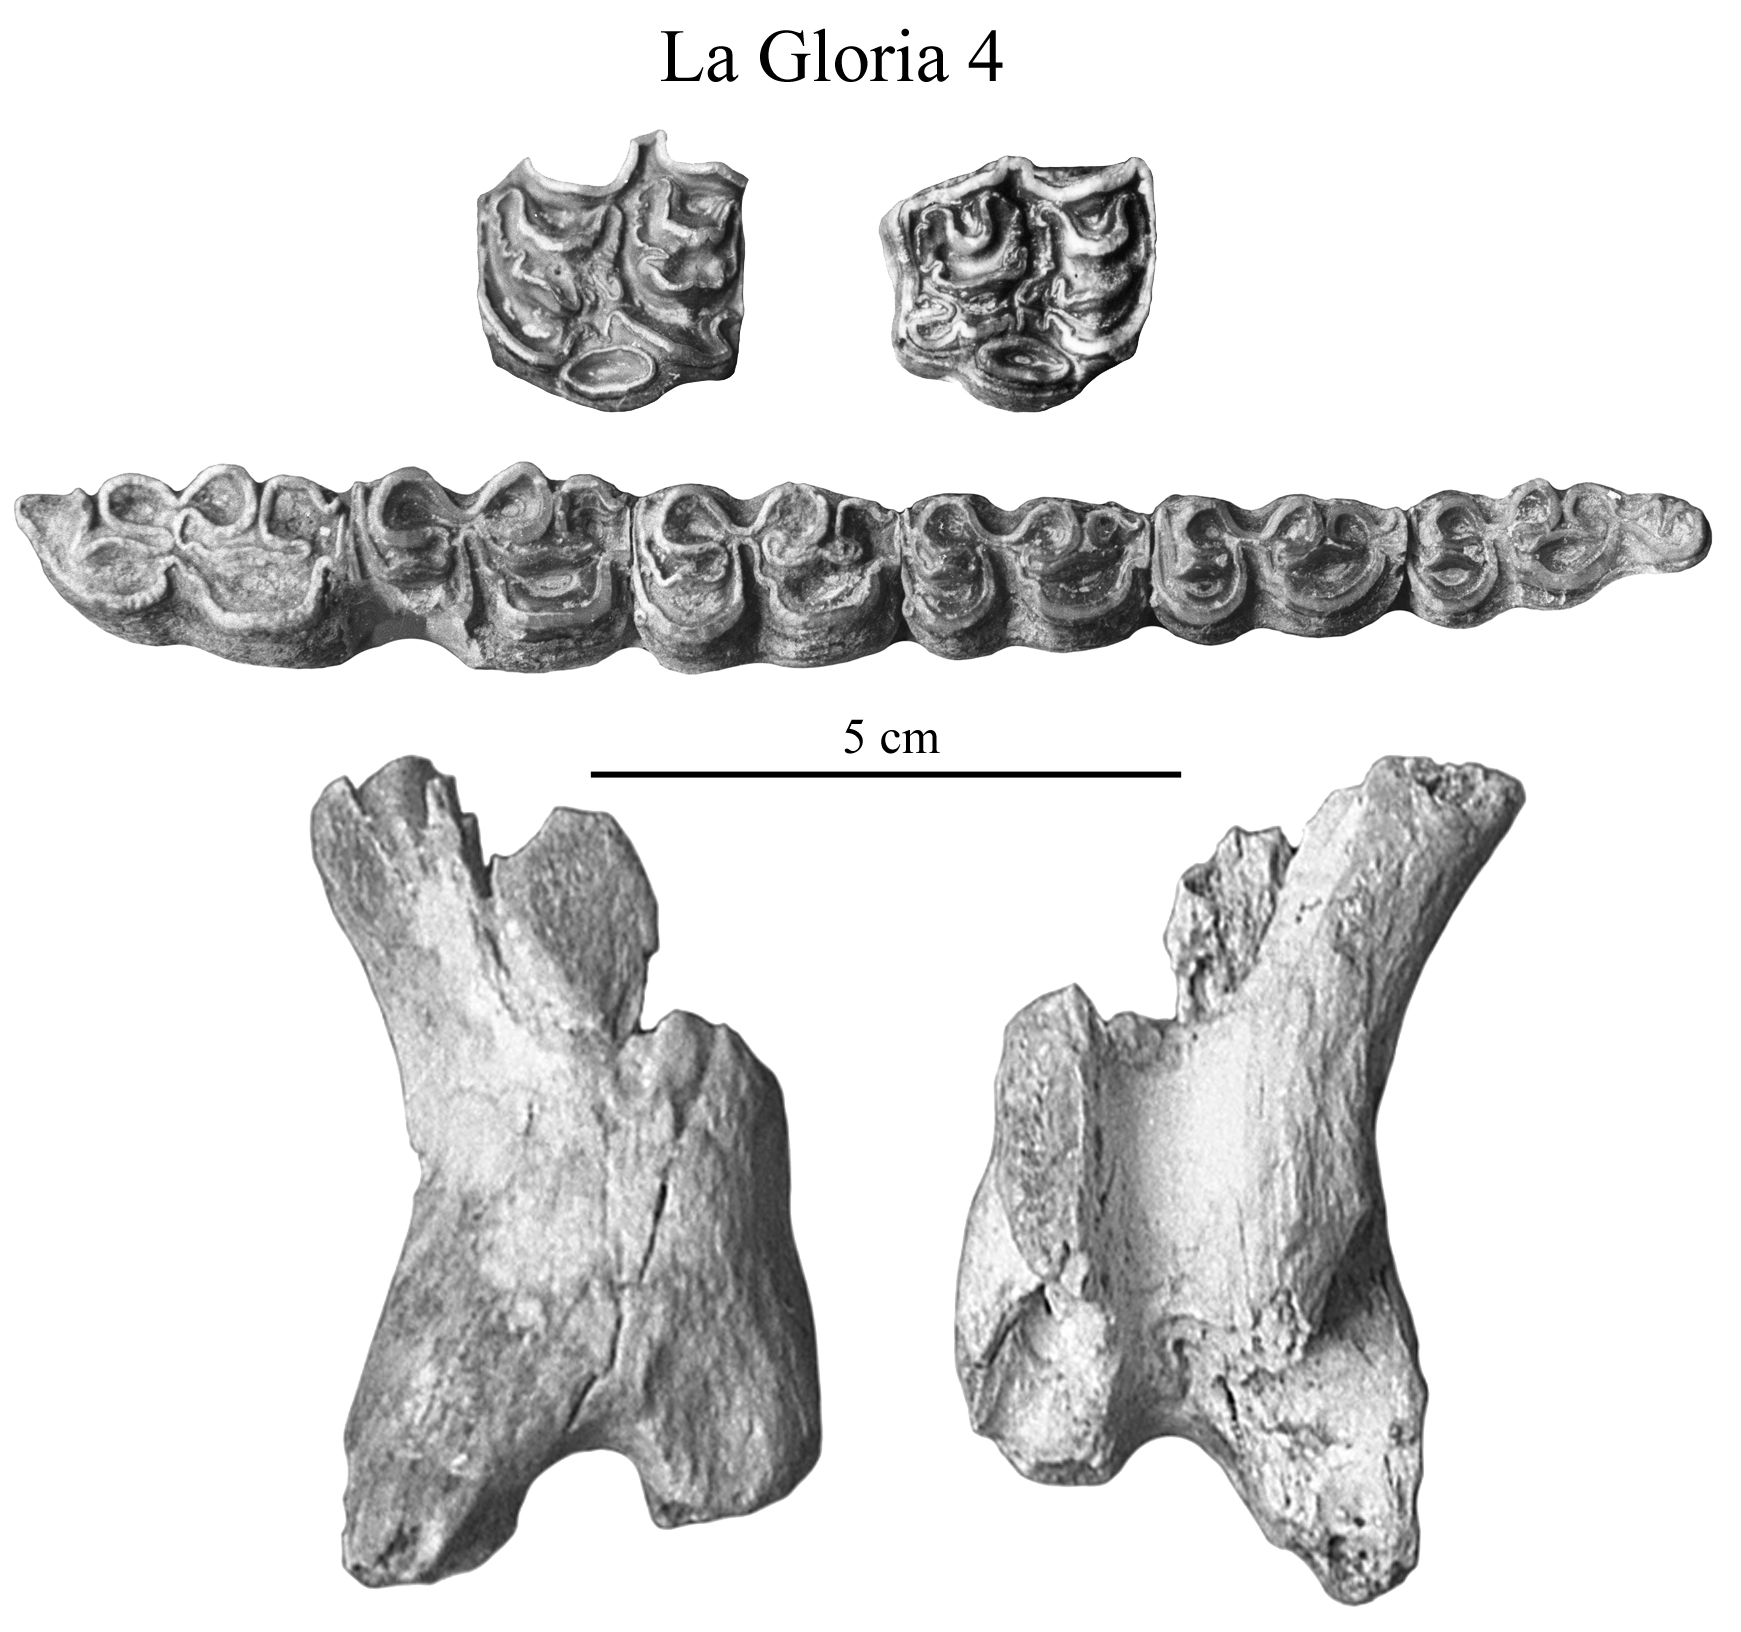 La Gloria 4, Cheek teeth and Symphysis